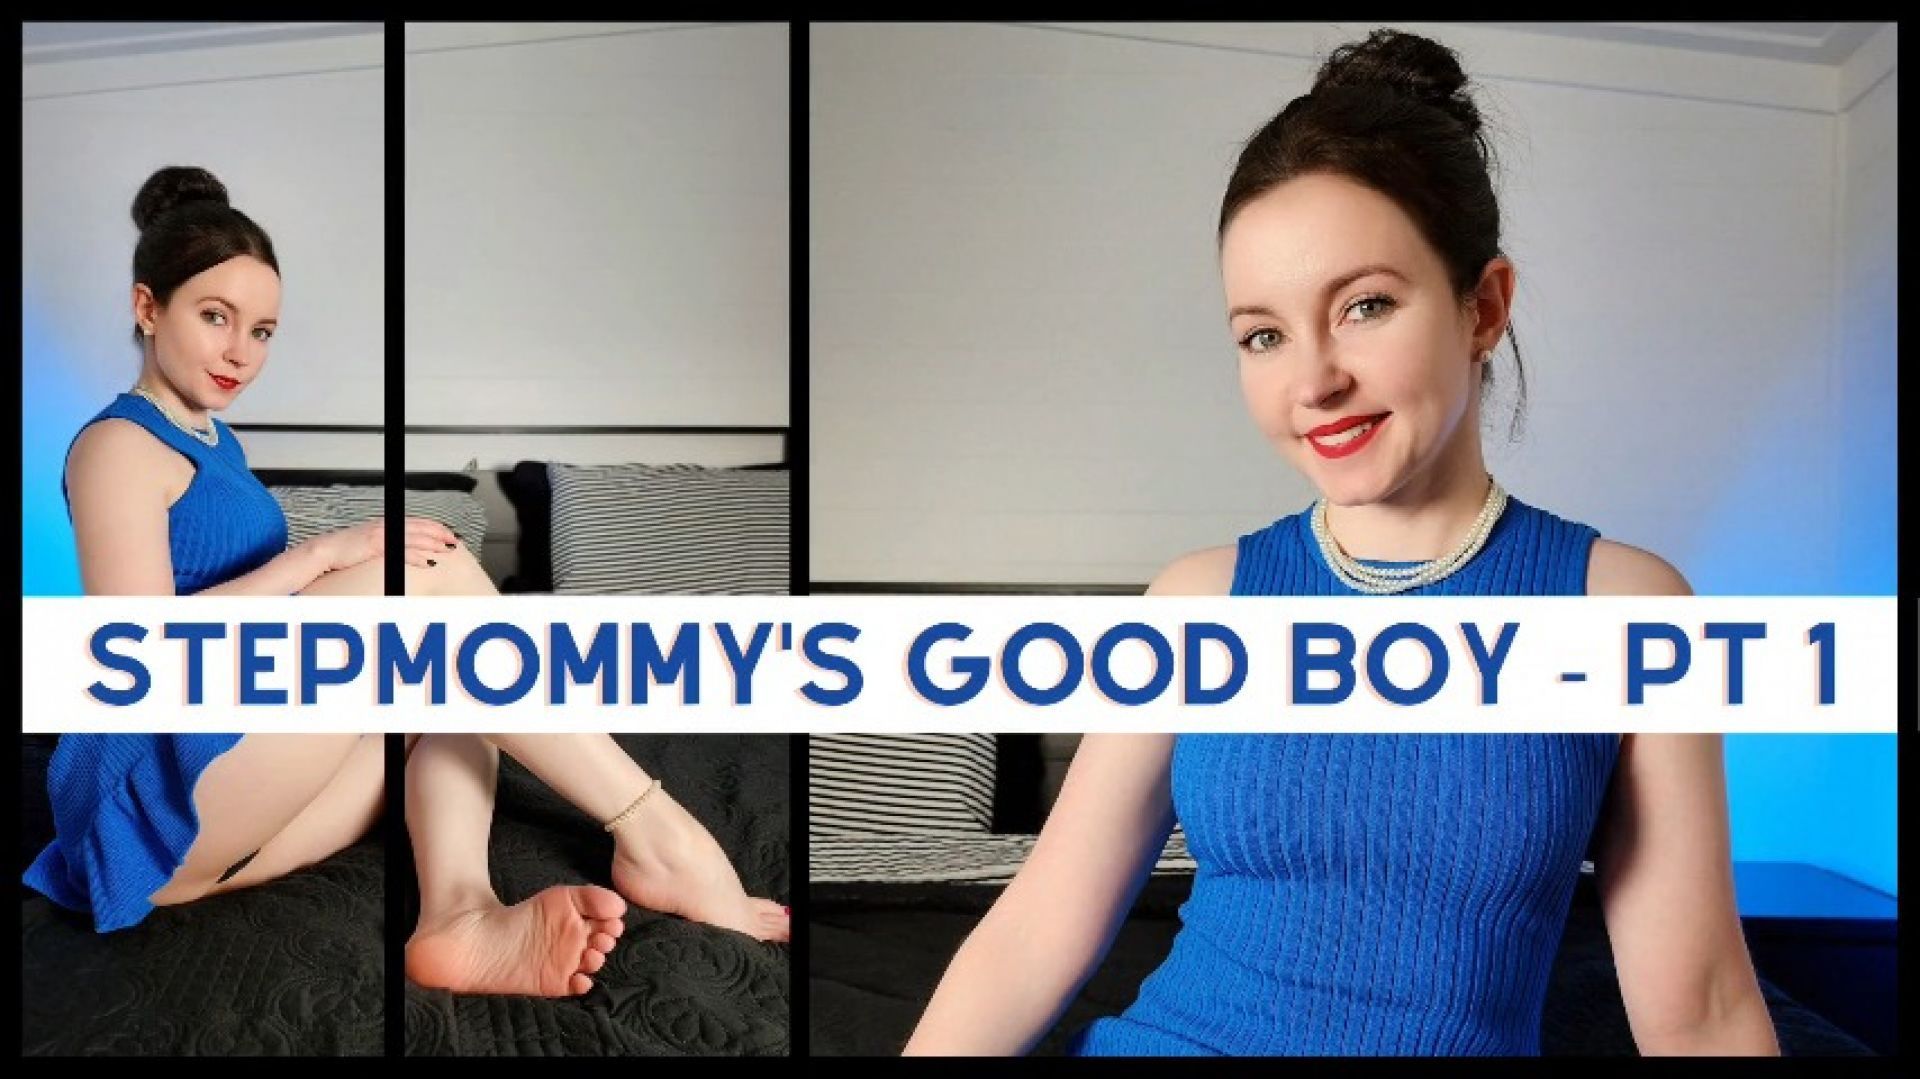 Stepmommy's Good Boy - Part 1